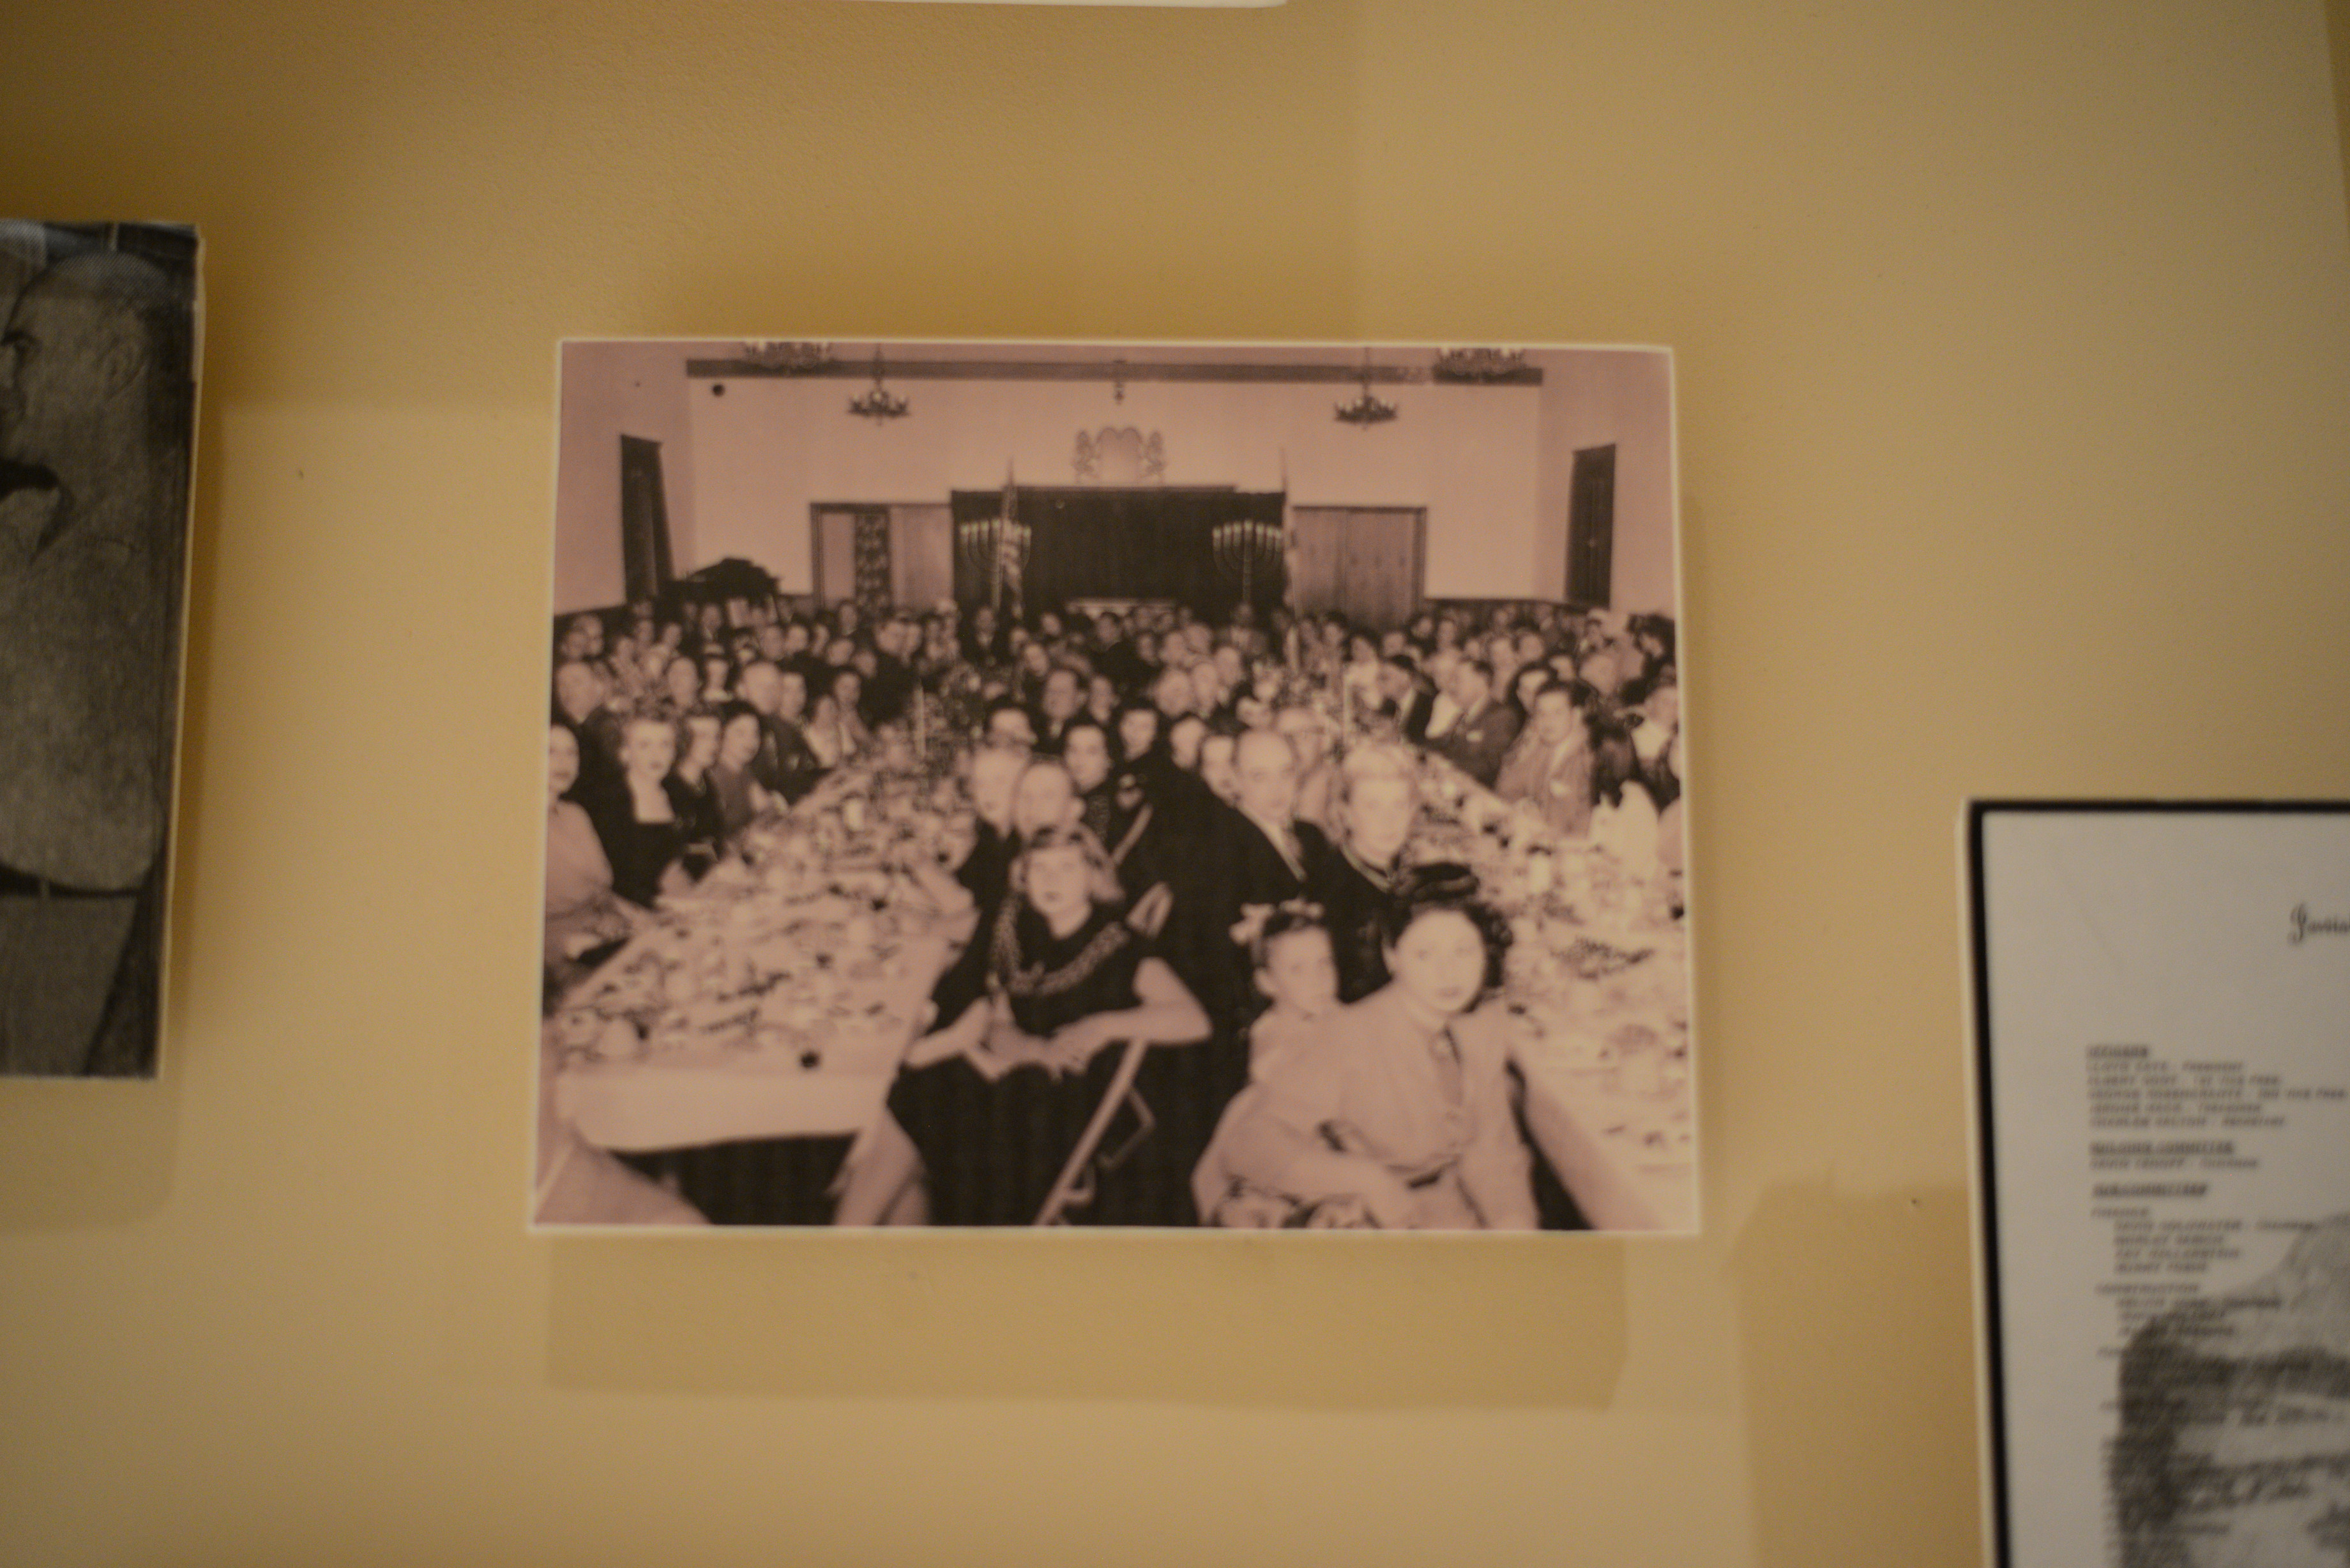 Photograph of banquet event